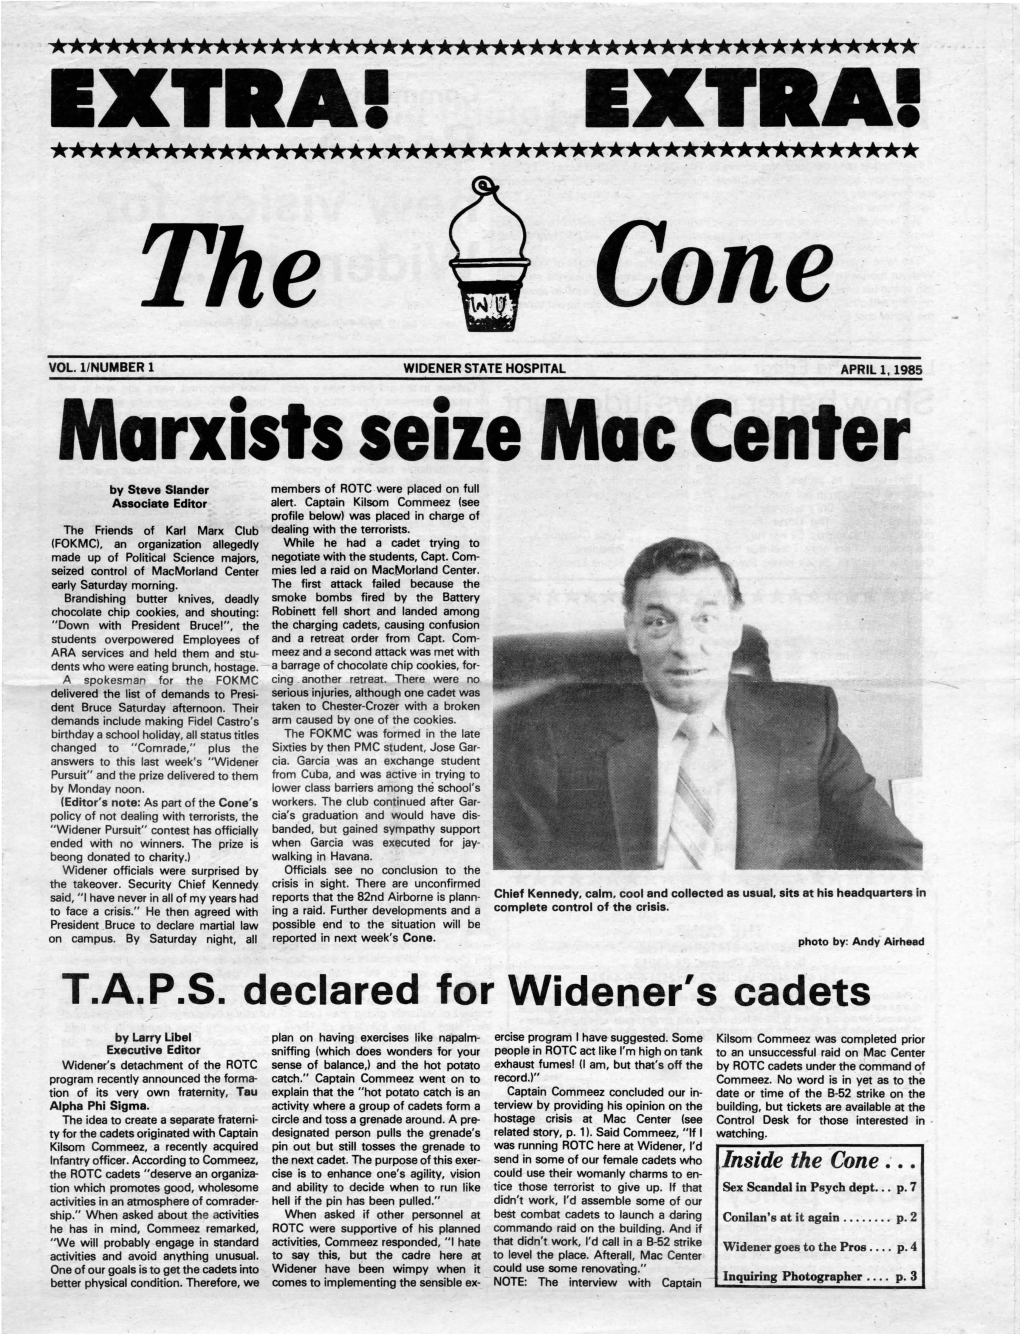 Marxists Seize Mac Center by Steve Slander Members of ROTC ·Were Placed on Full Associate Editor Alert